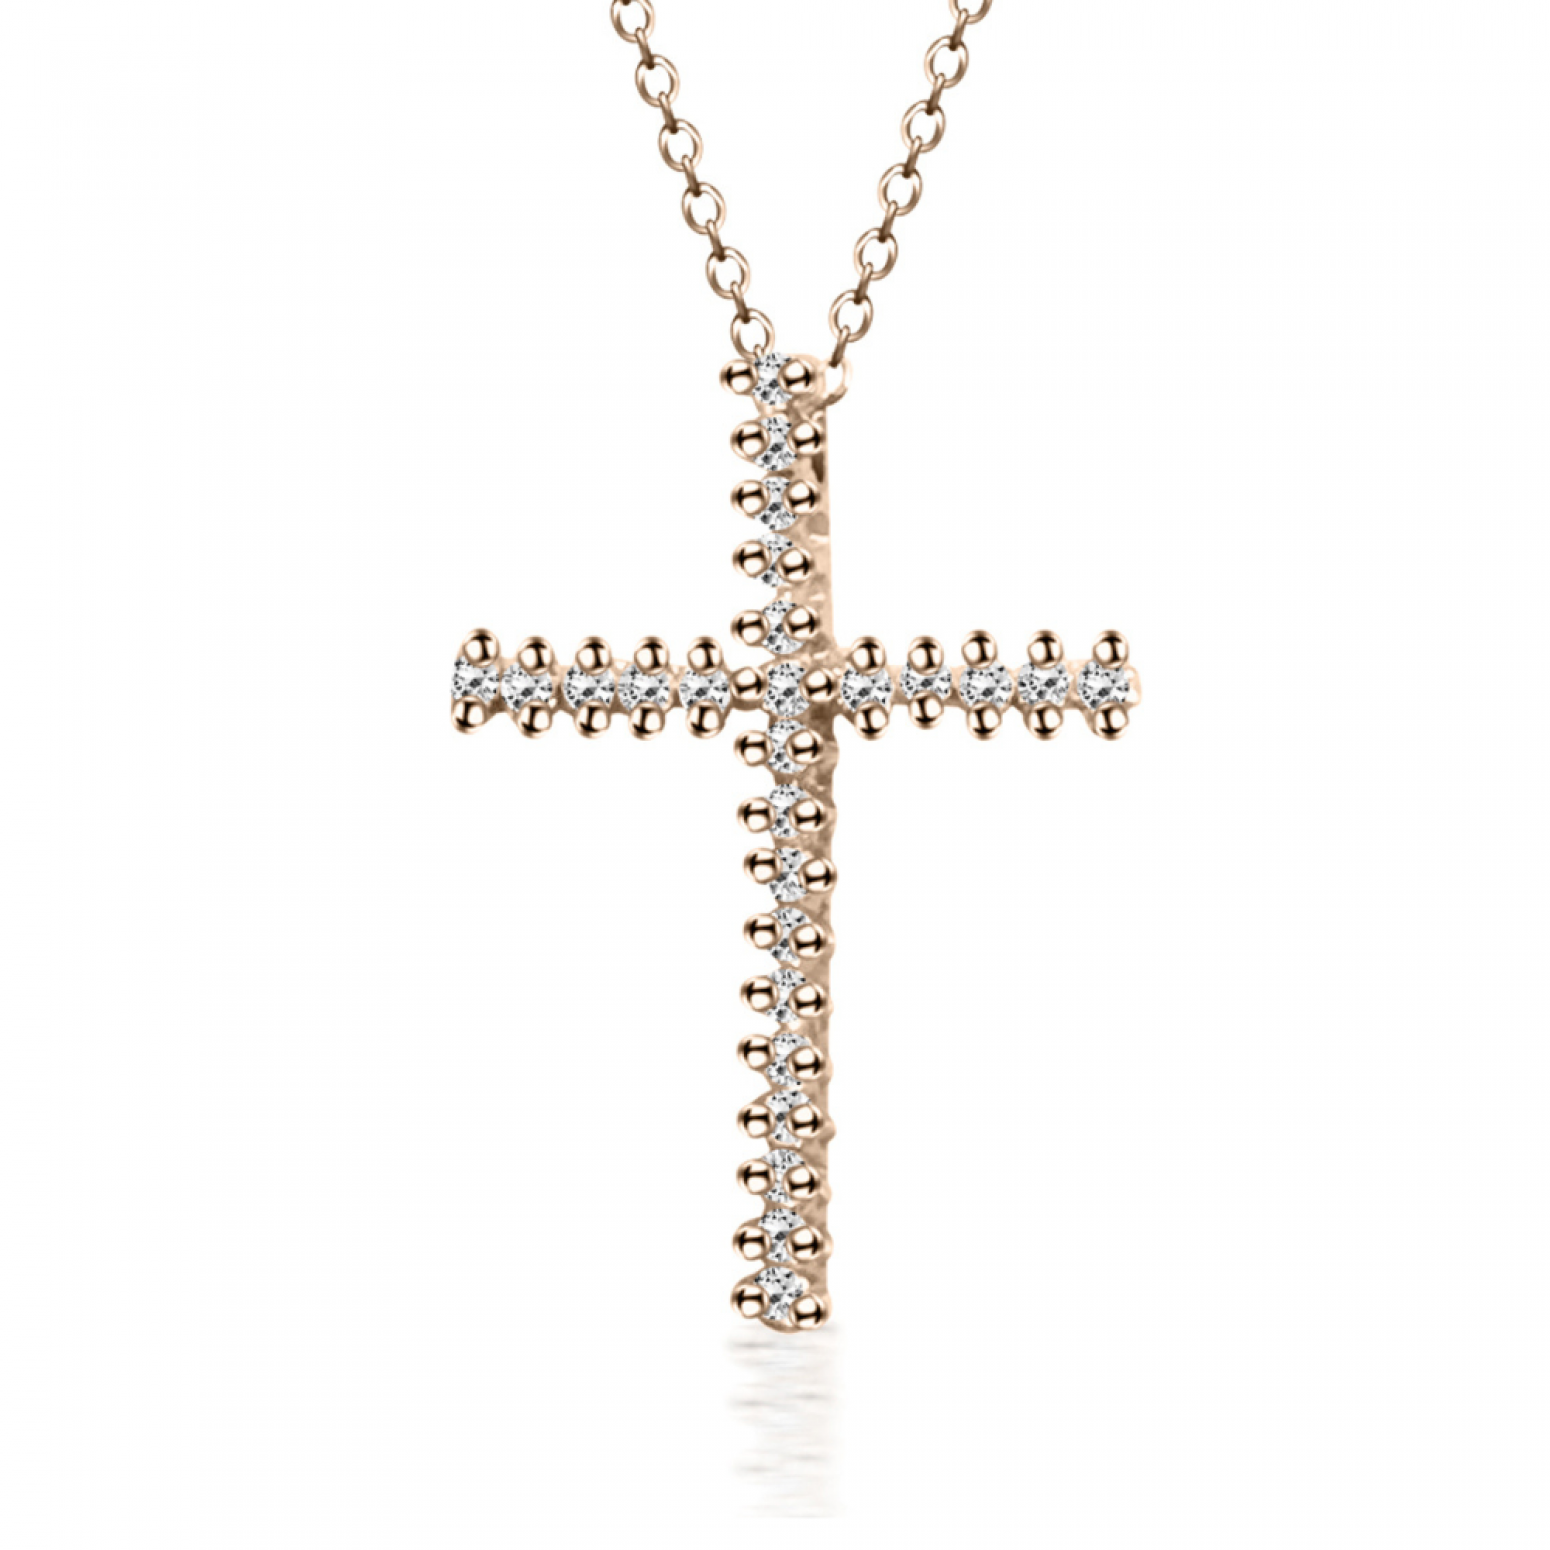 Baptism cross with chain K18 pink gold with diamonds 0.015ct, VS2, H ko5214 CROSSES Κοσμηματα - chrilia.gr